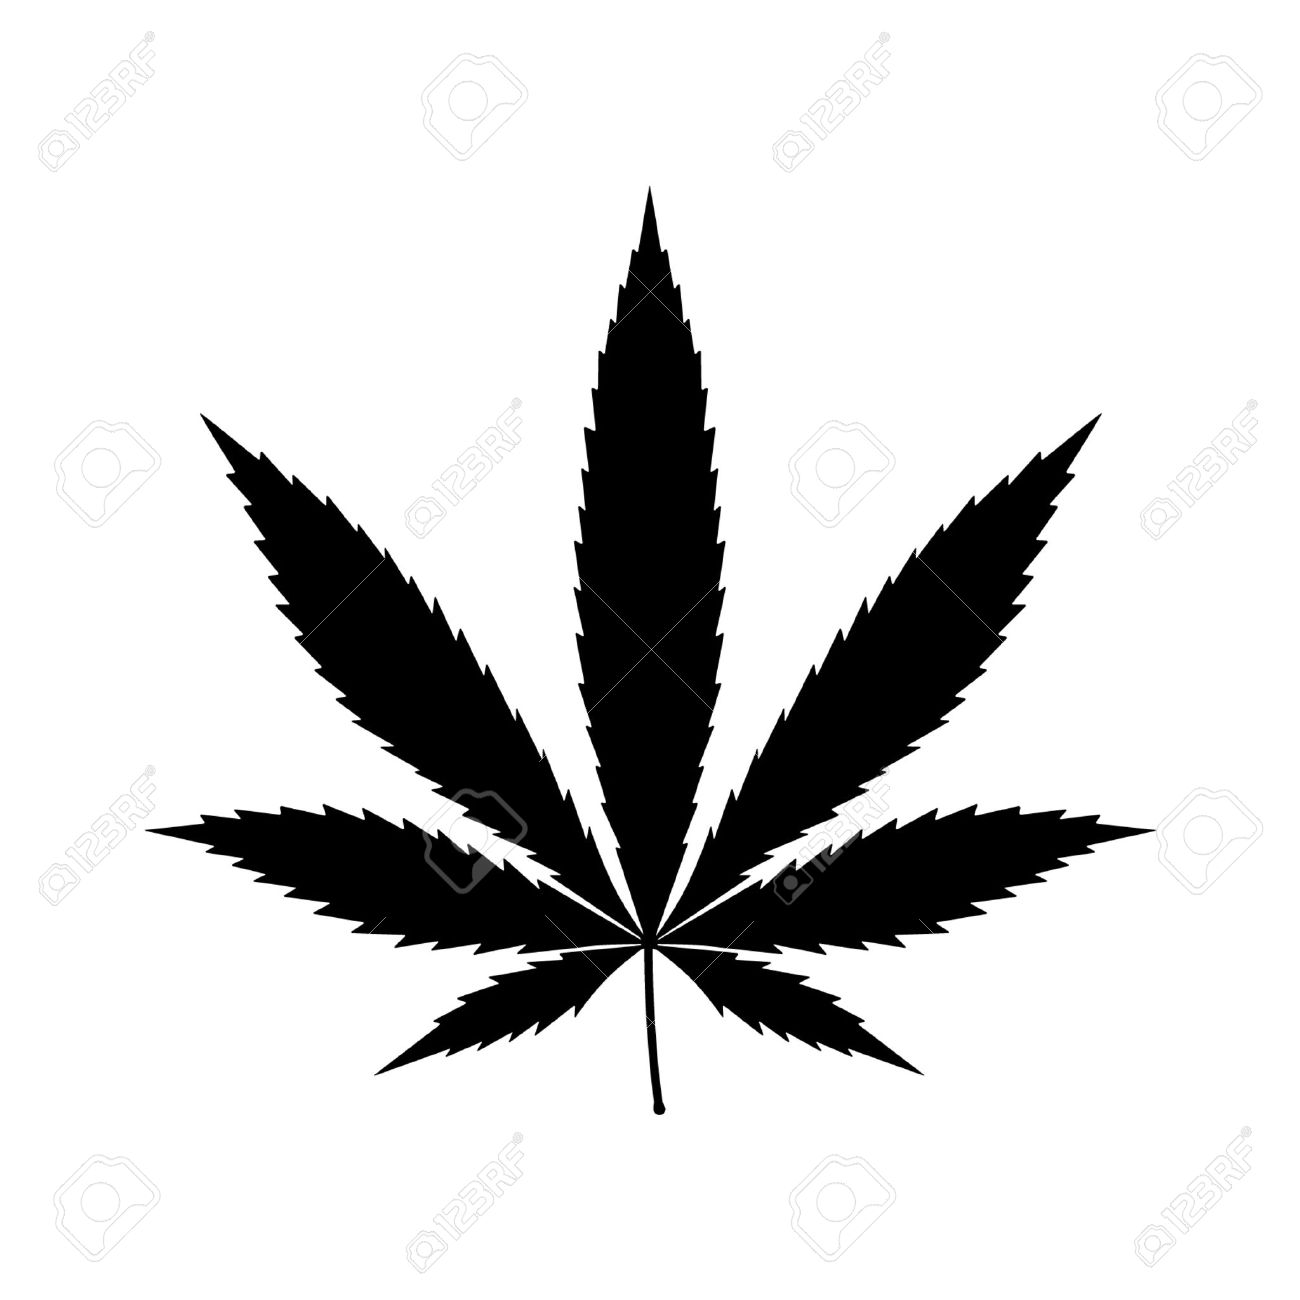 Cannabis leaf icon stock vector. Illustration of spray - 36019834